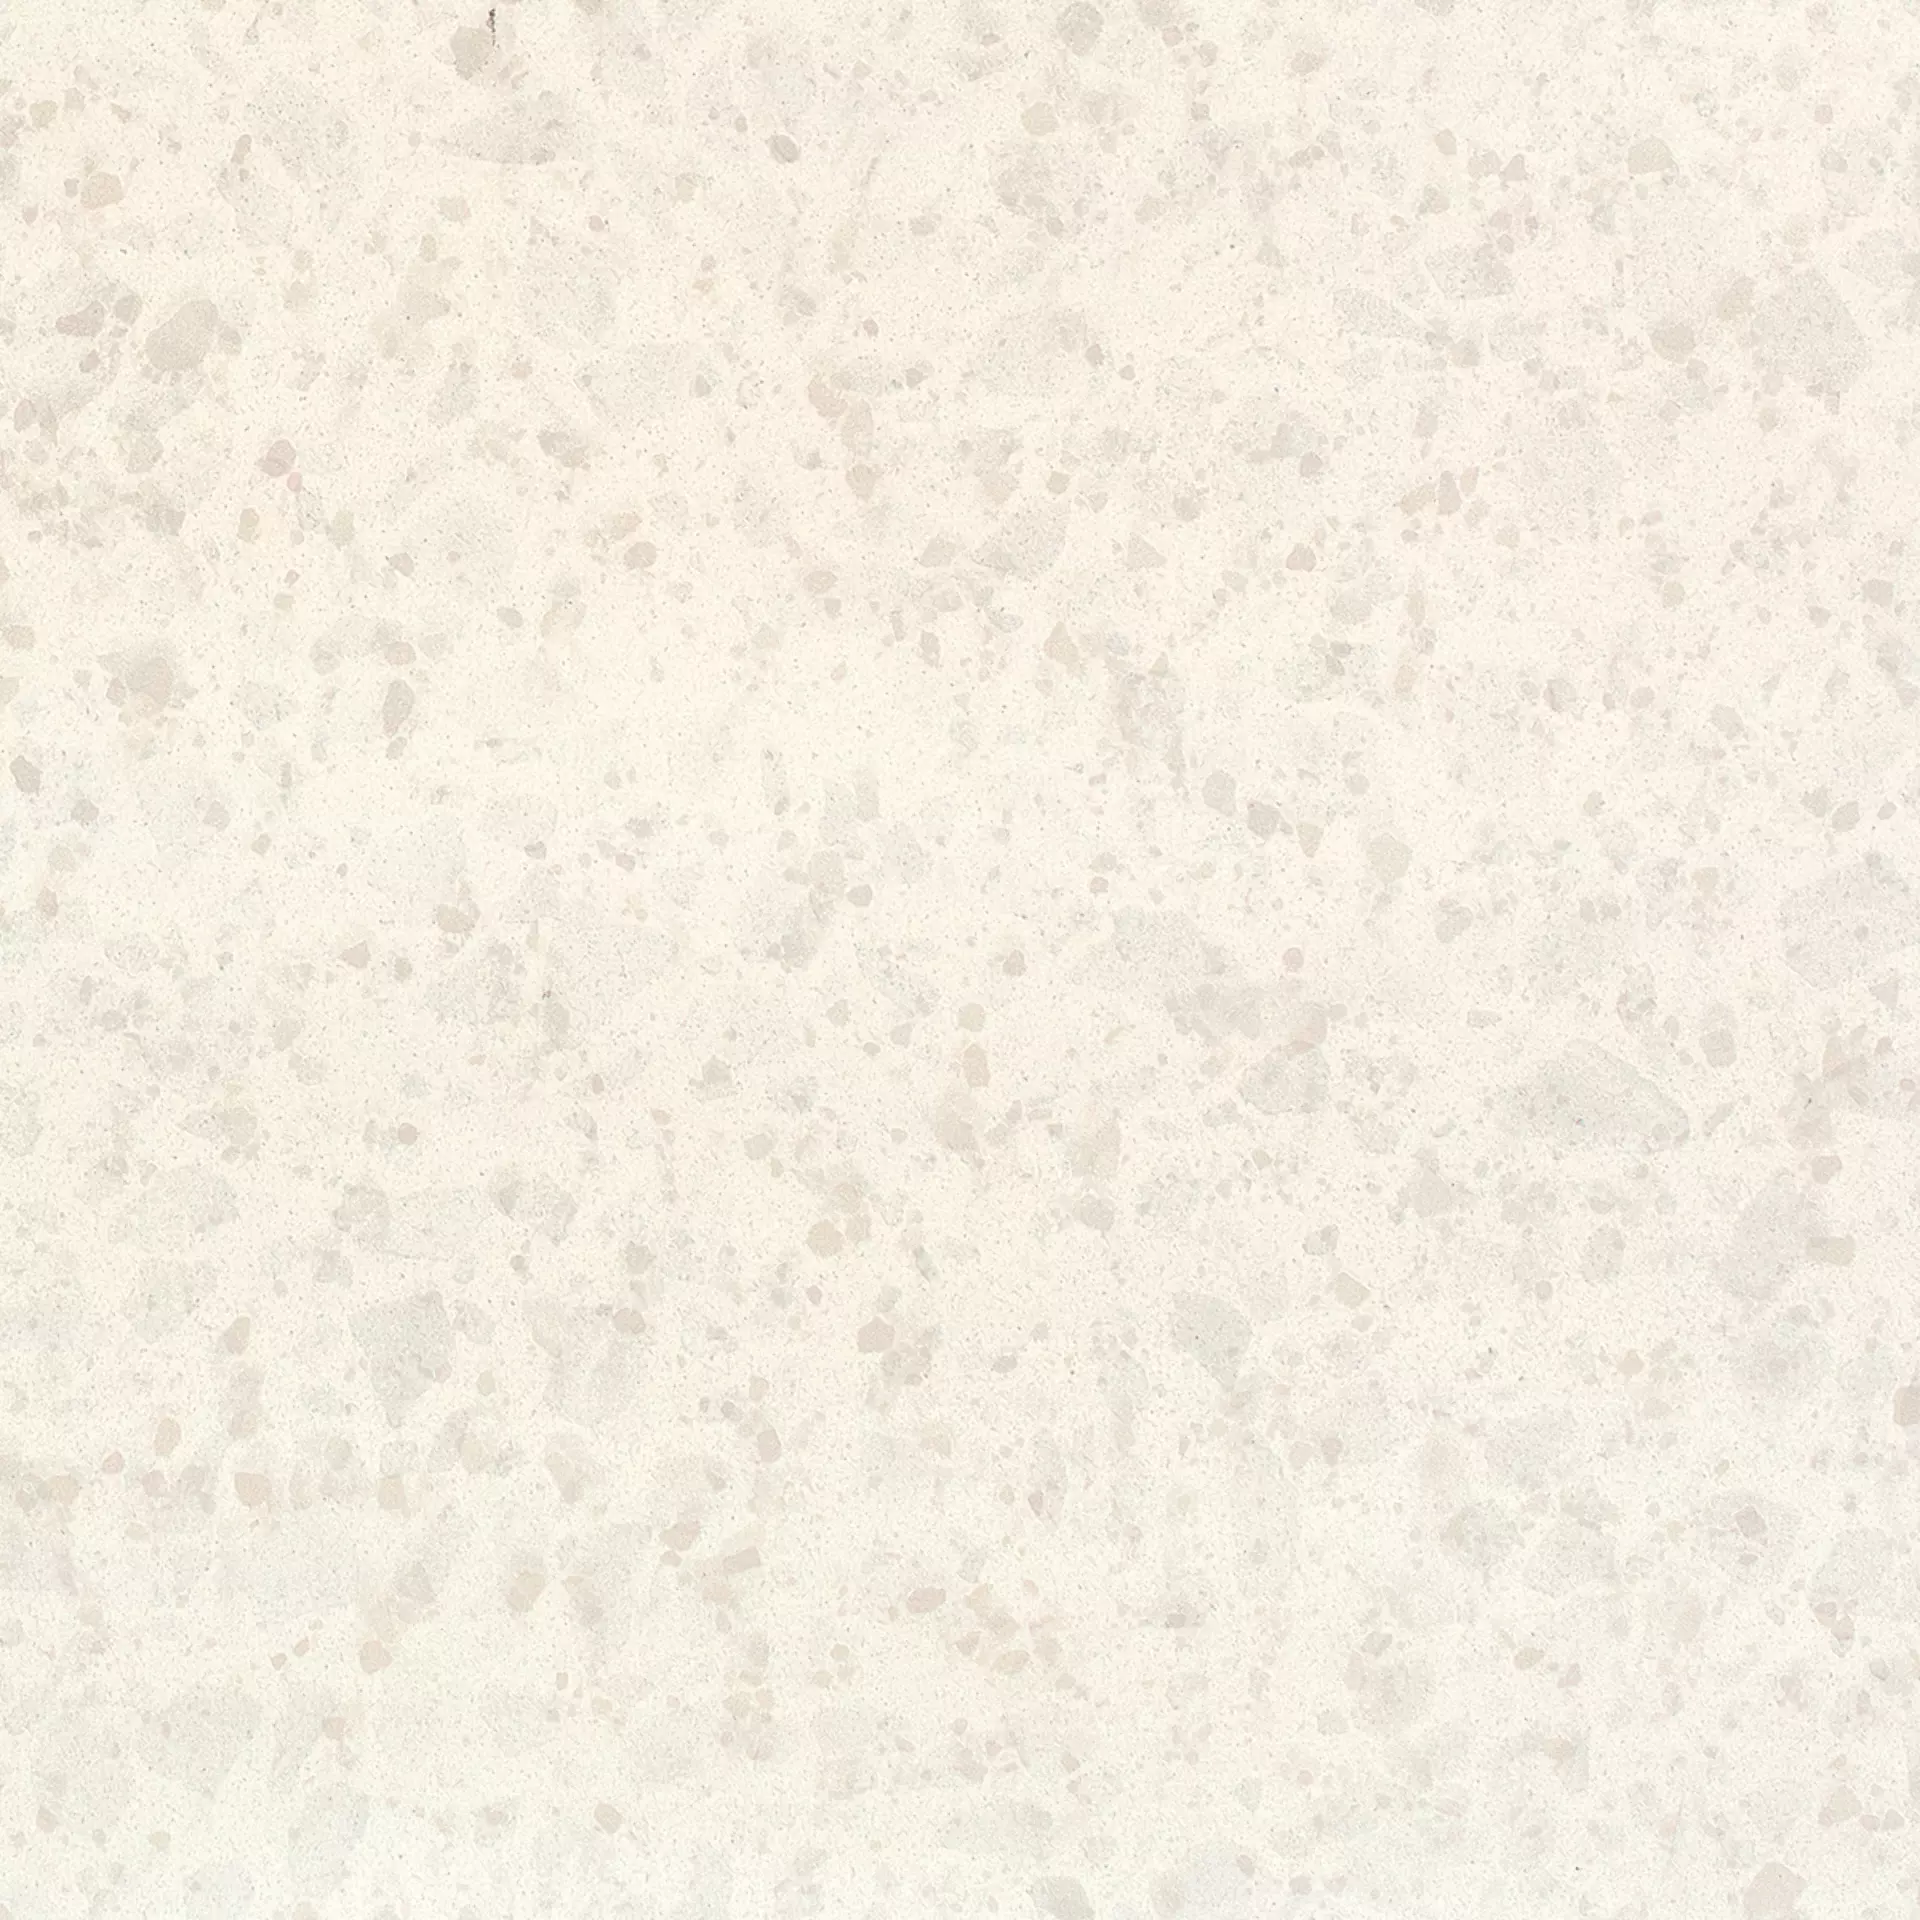 Gigacer Inclusioni Soave Bianco Perla Matt Bianco Perla 12INCL60BIAPERMAT matt 60x60cm 12mm